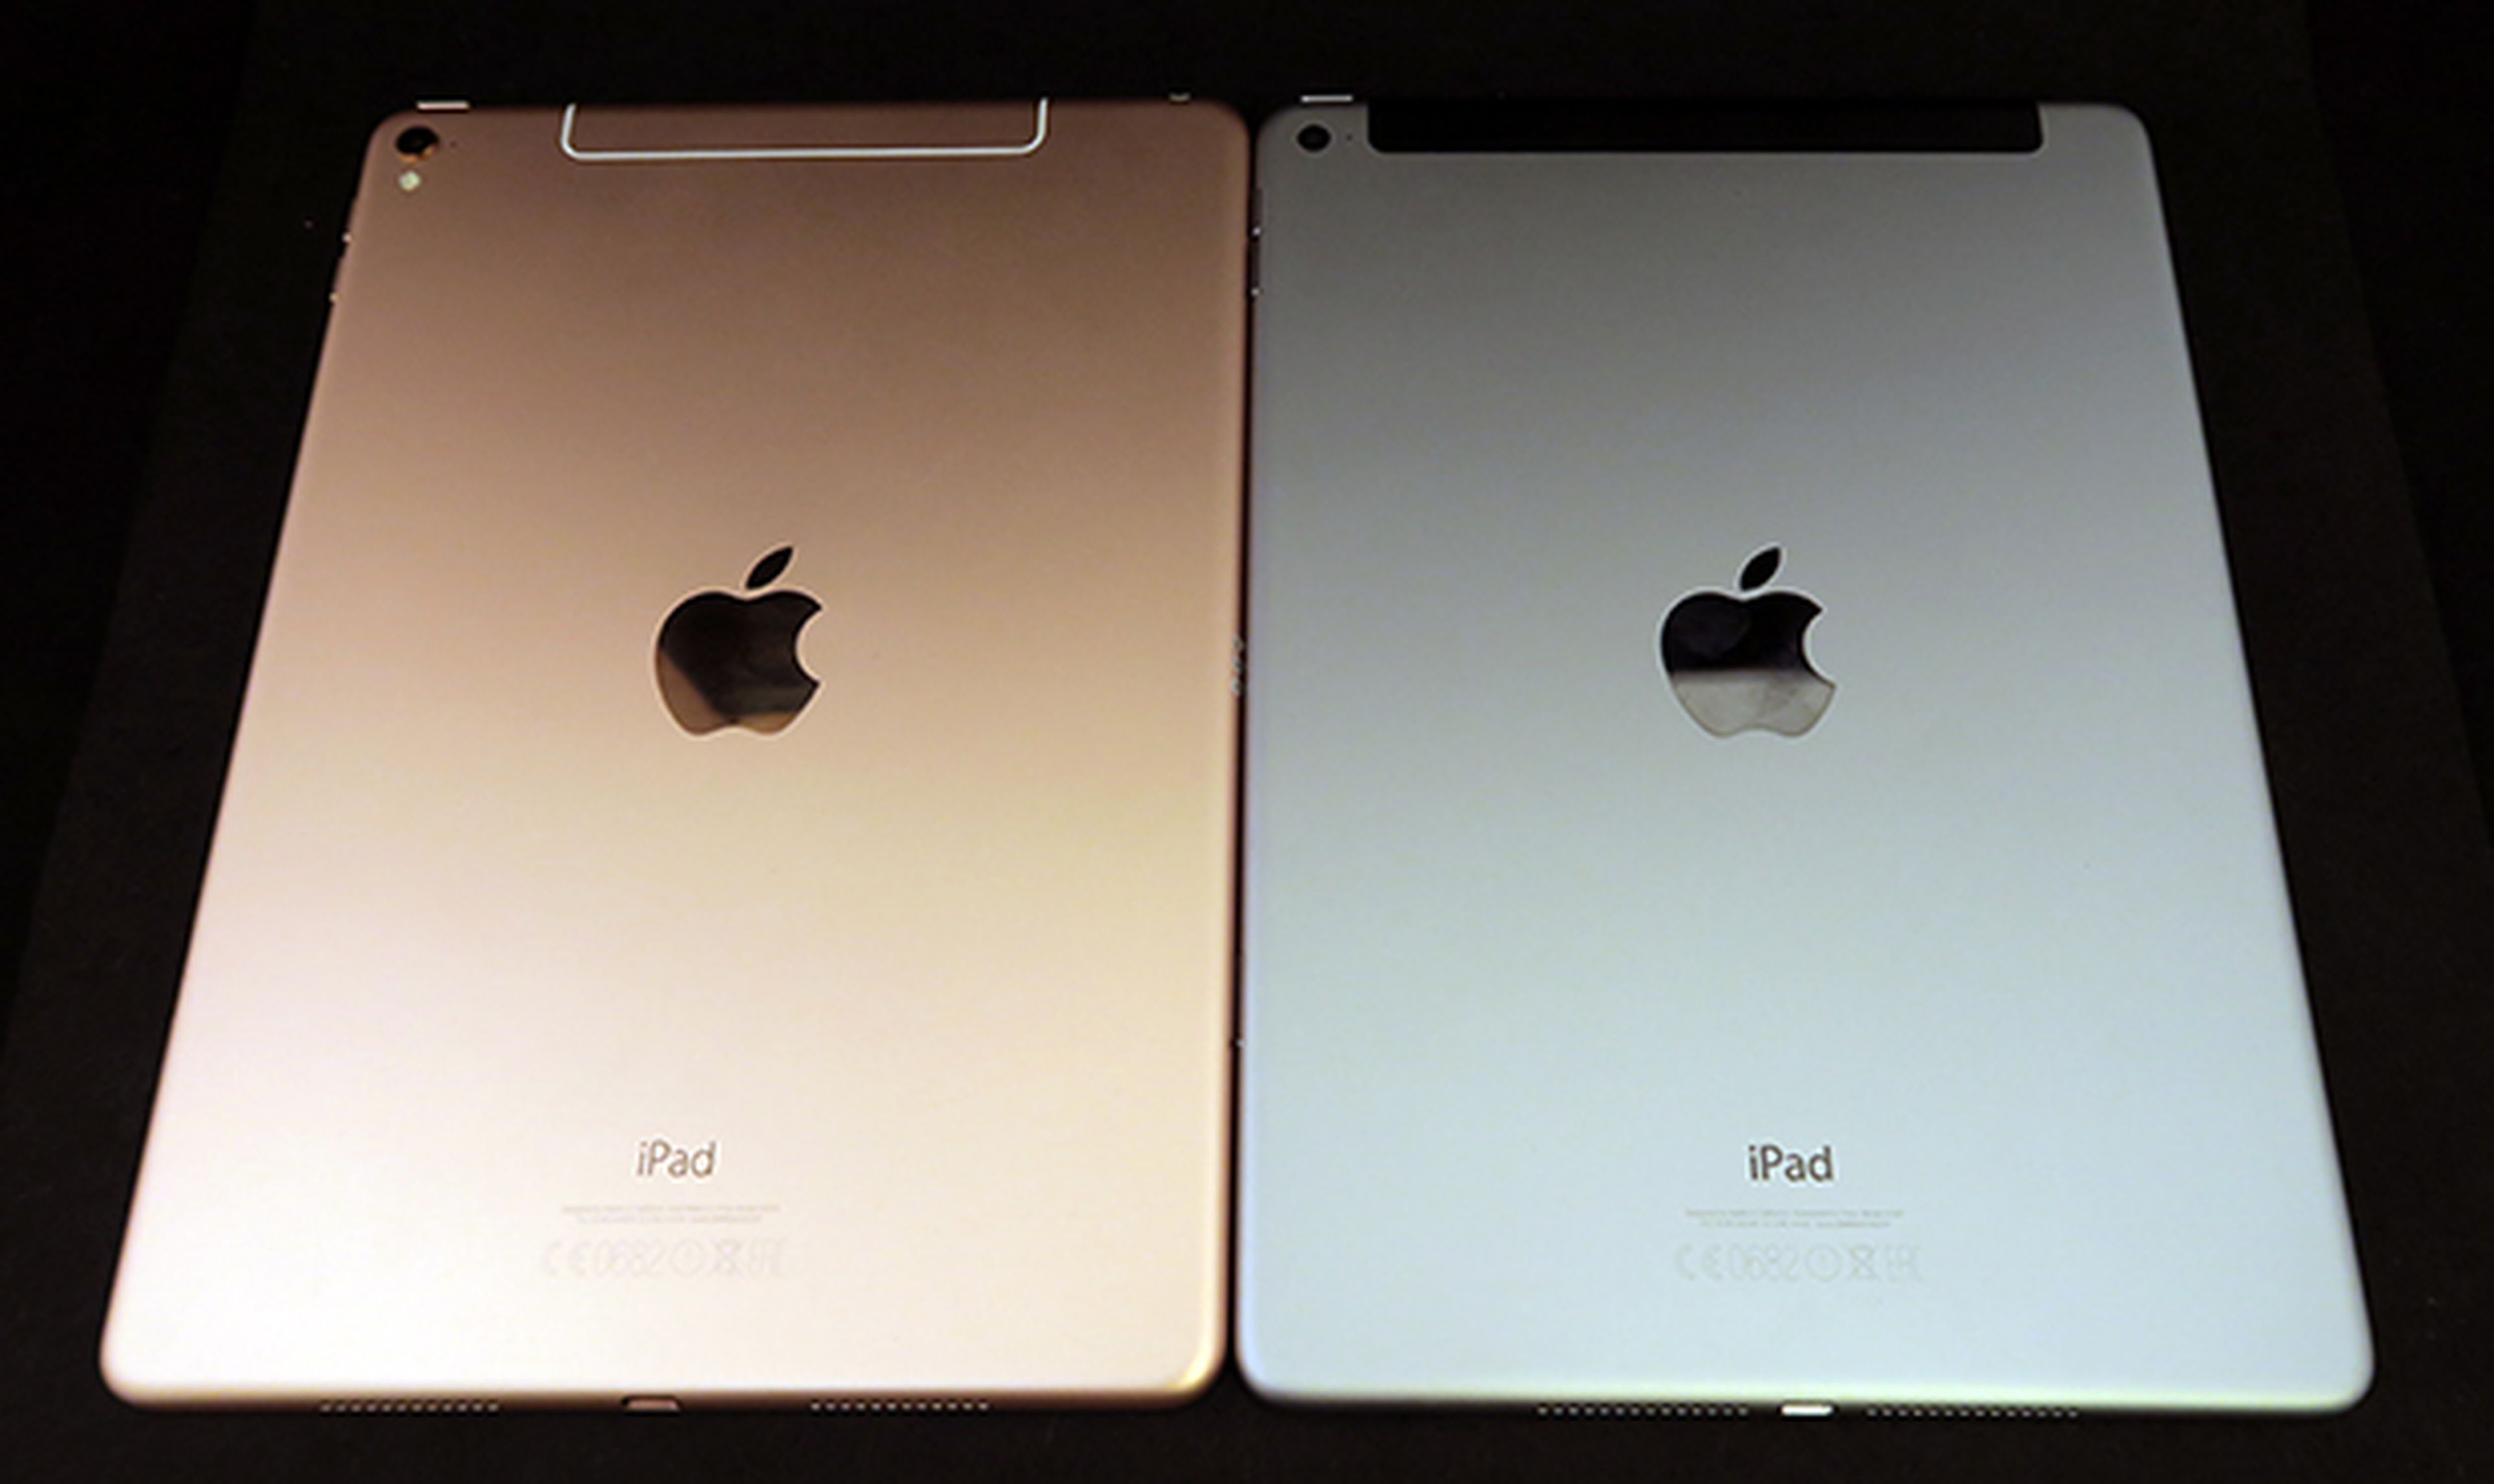 Ipad Pro 9.7 vs iPad Air 2